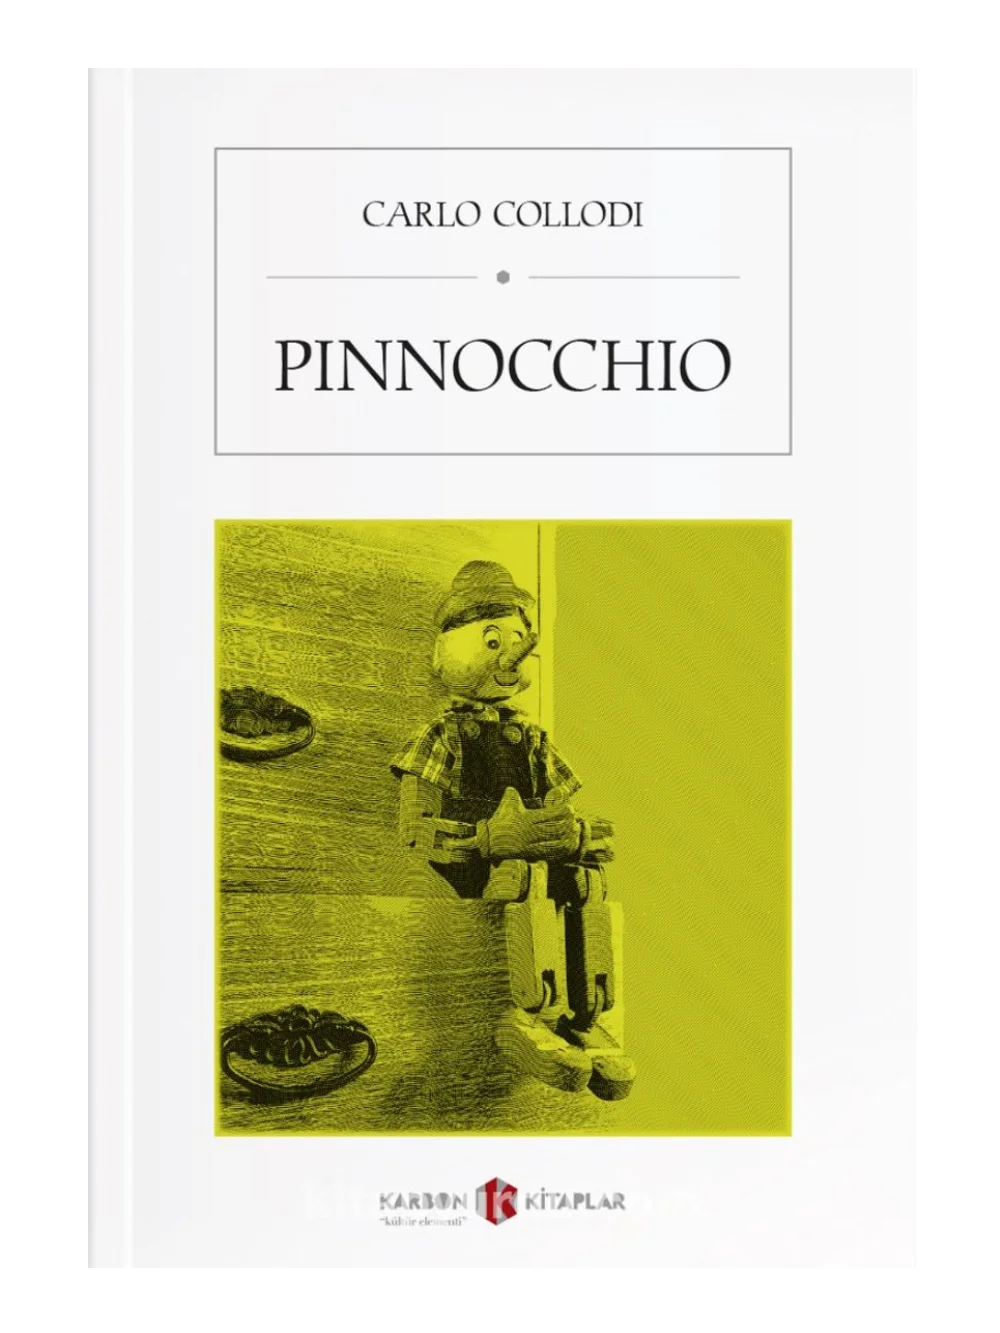 

Pinocchio - Carlo Collodi - Italian book - The best classics of world literature - Nice gift for friends and Italian learners